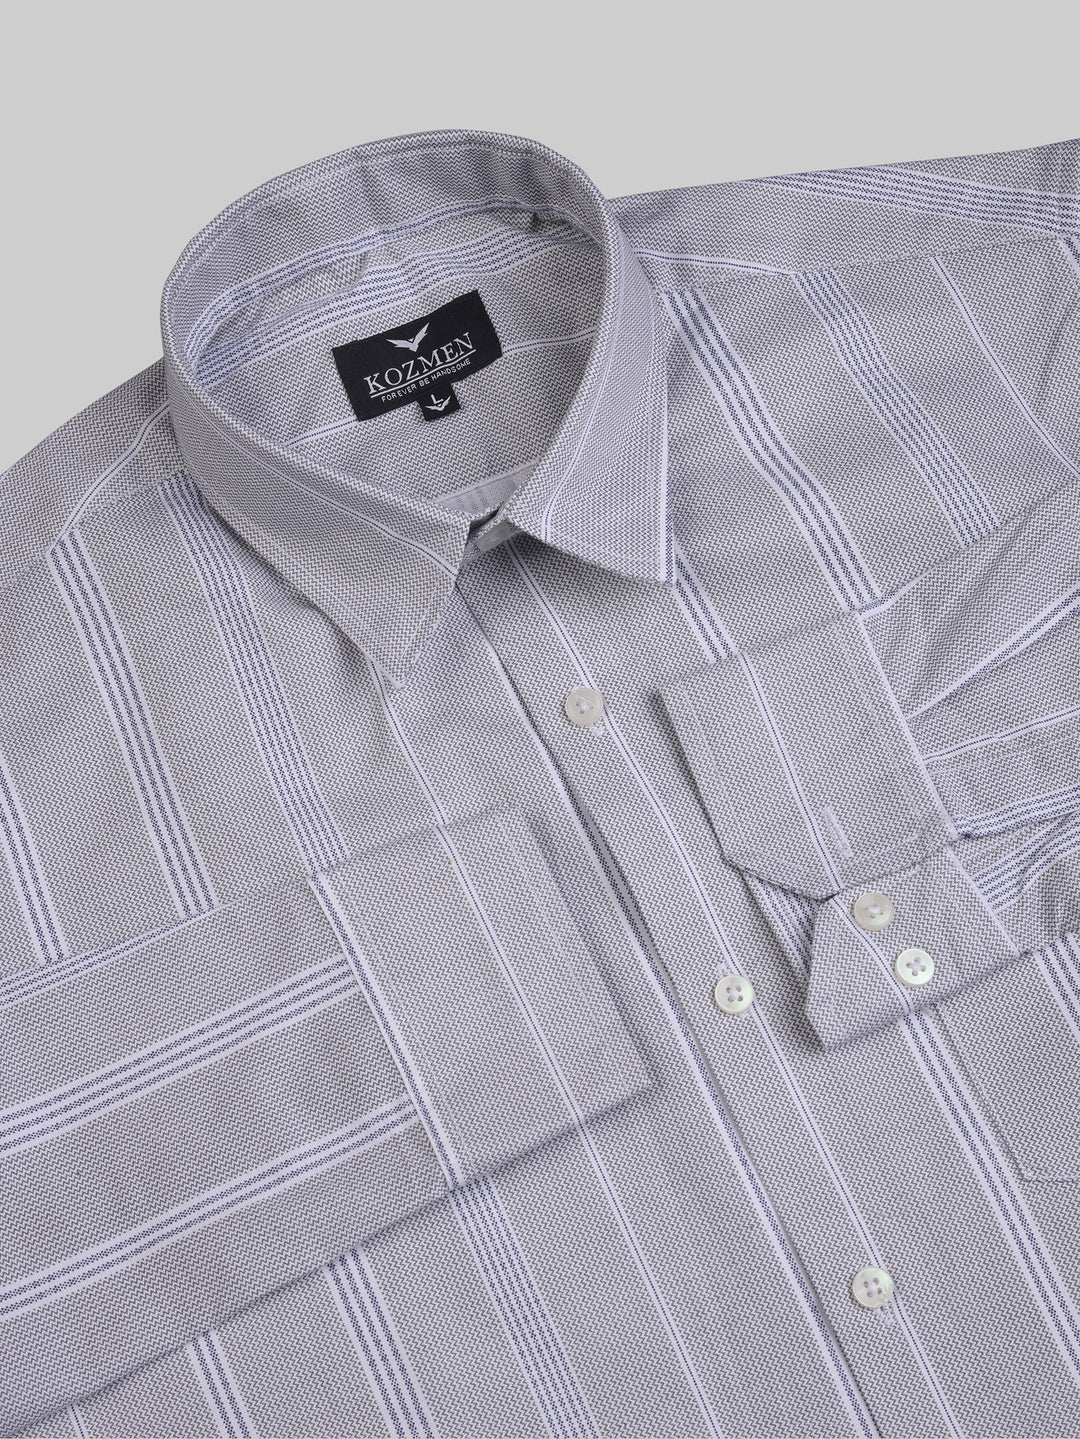 Smoke Grey Rising Pin Striped Cotton Shirt